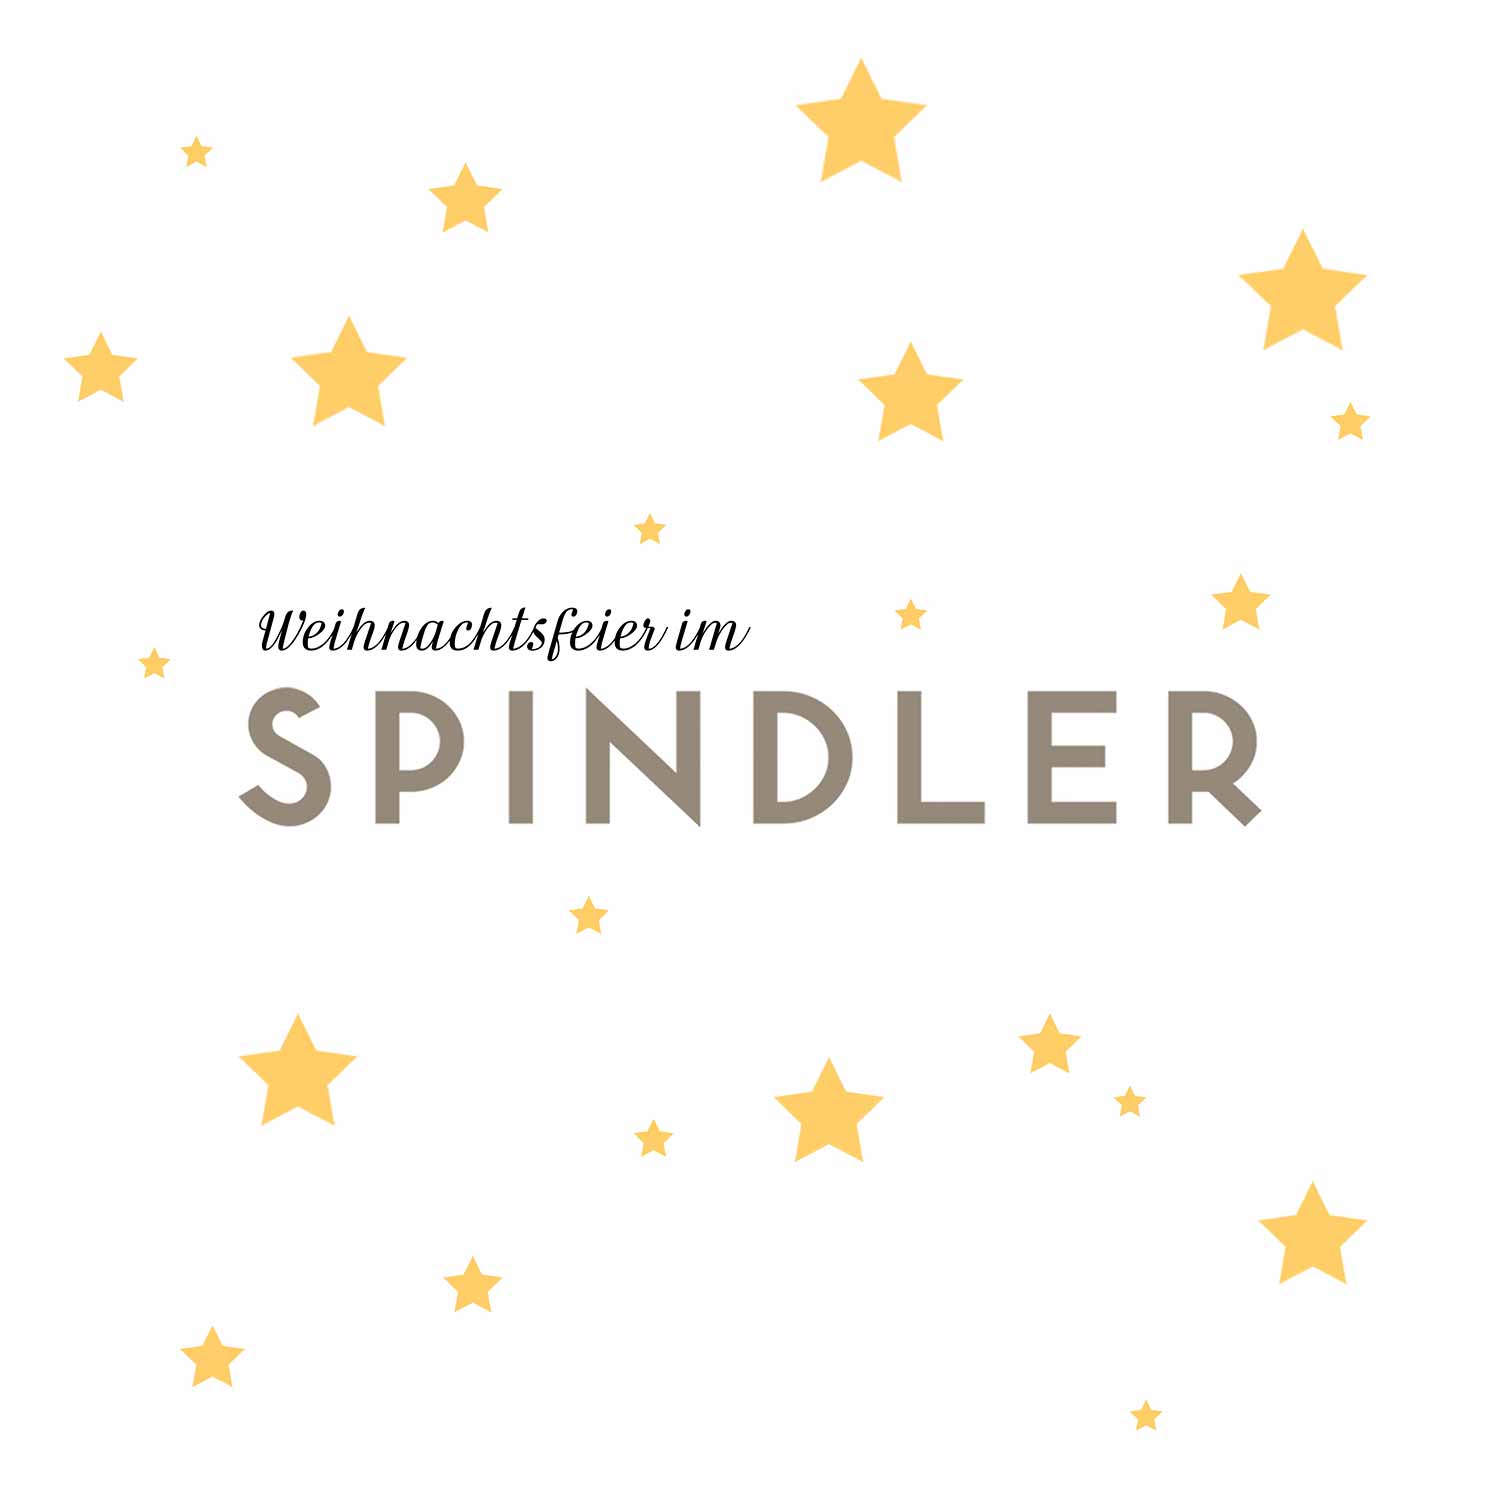 Spindler Christmas Party Berlin Logo